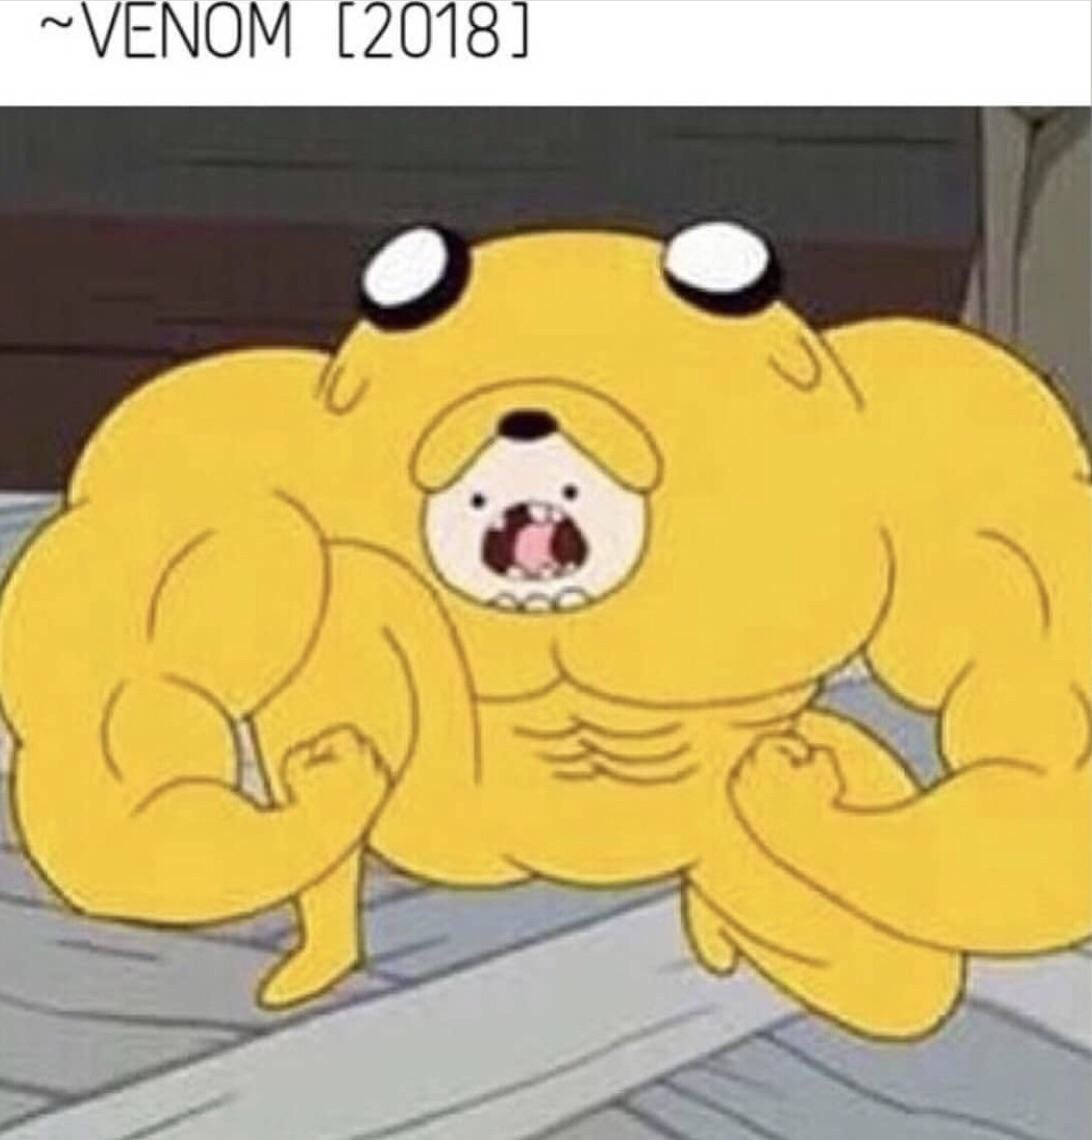 venom adventure time meme - ~Venom 2018